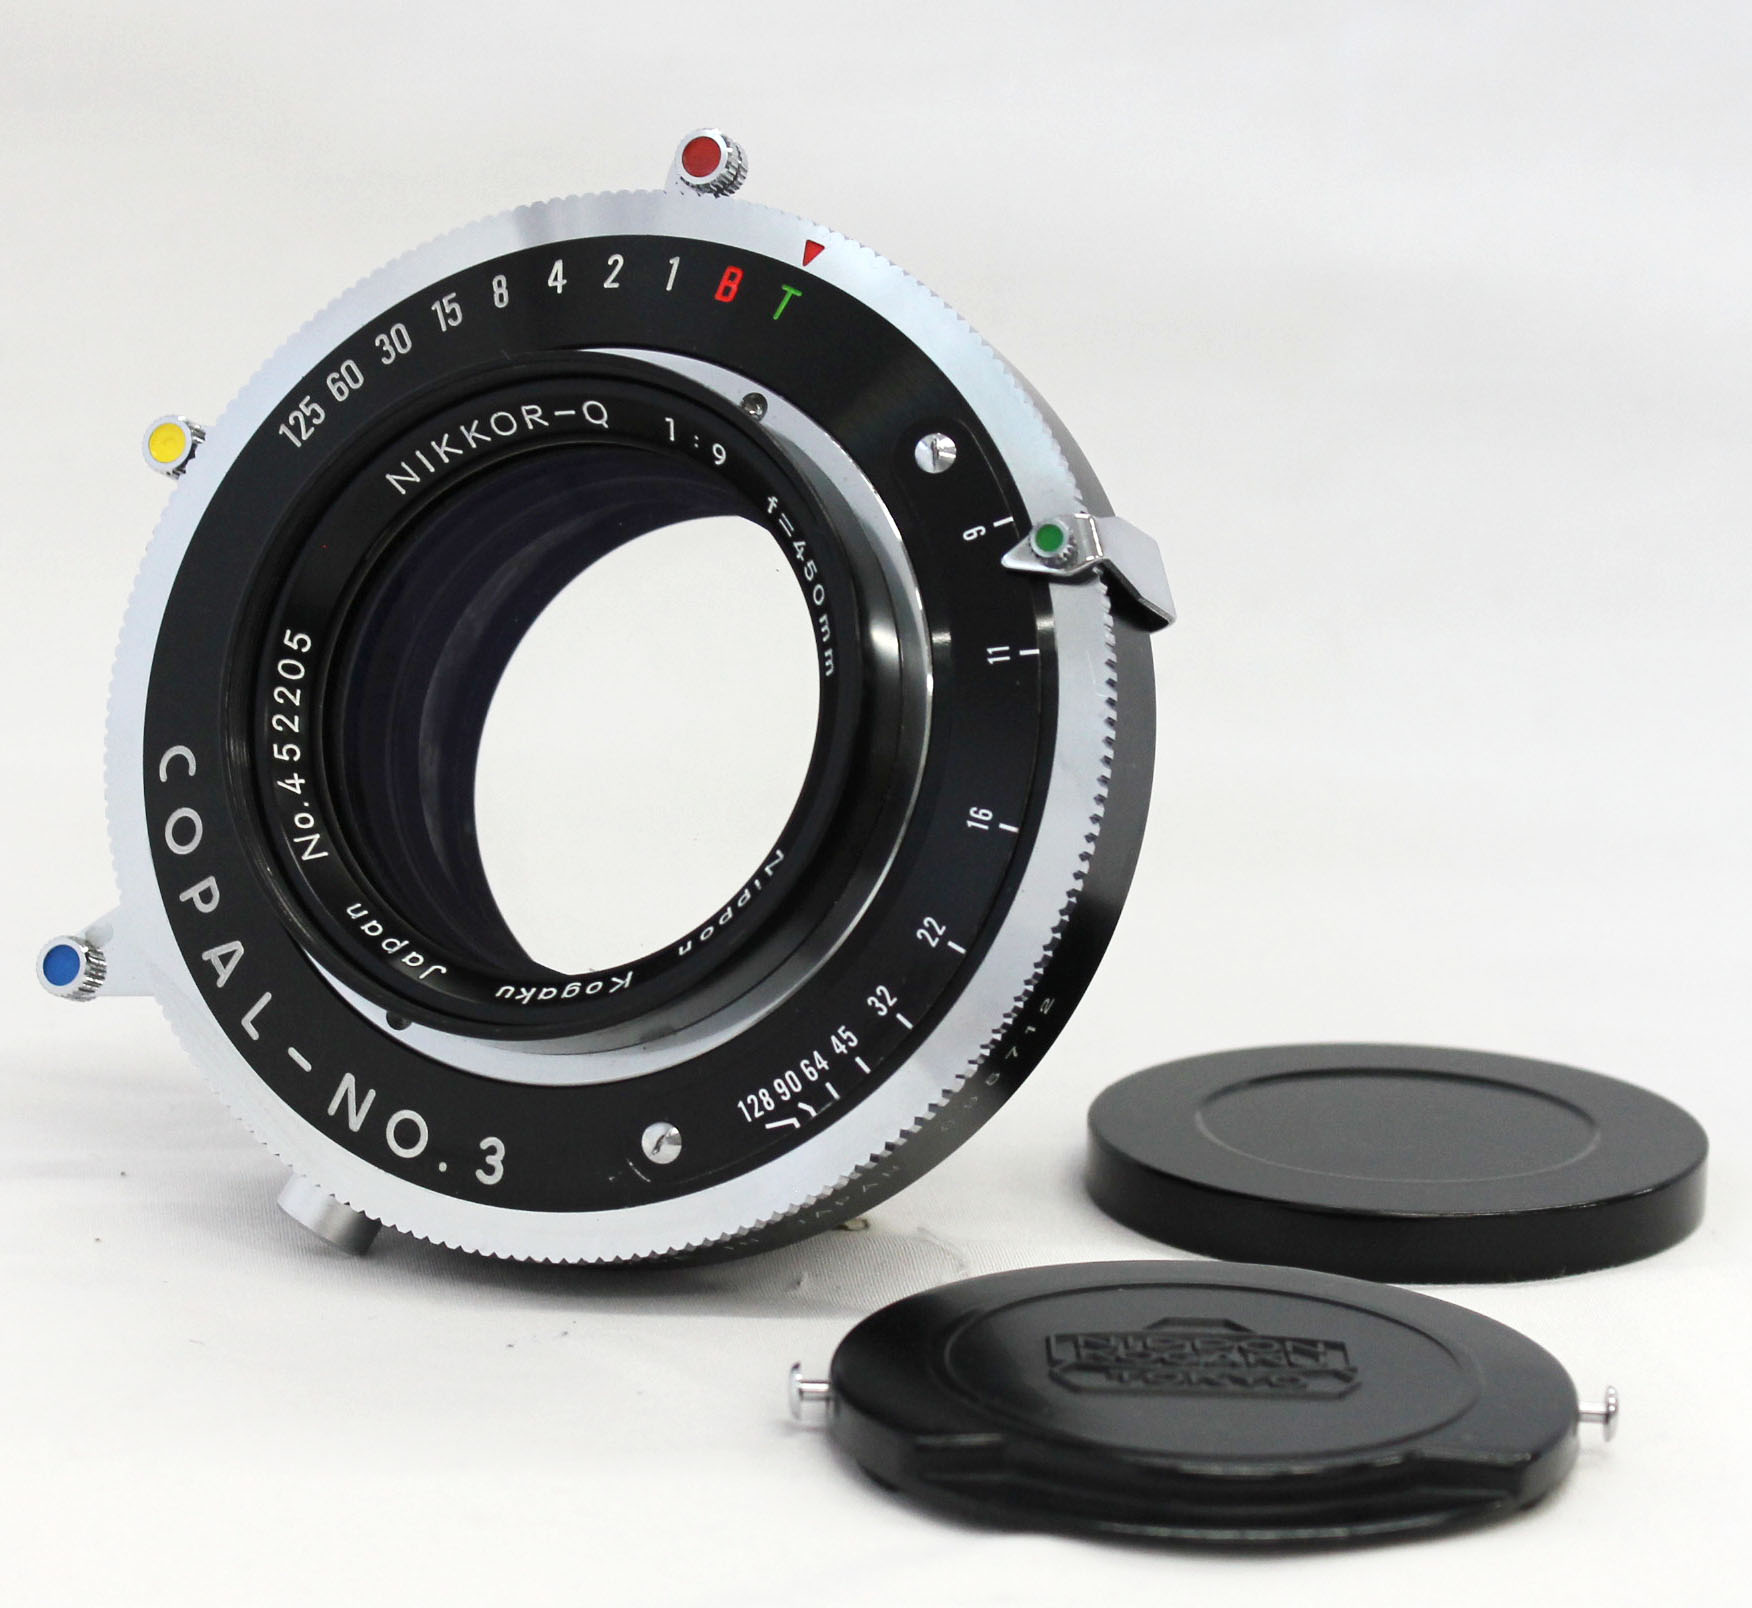 Japan Used Camera Shop | [Near Mint] Nikon Nippon Kogaku Nikkor-Q 450mm F/9 8x10 4x5 Lens Copal No.3 Shutter from Japan